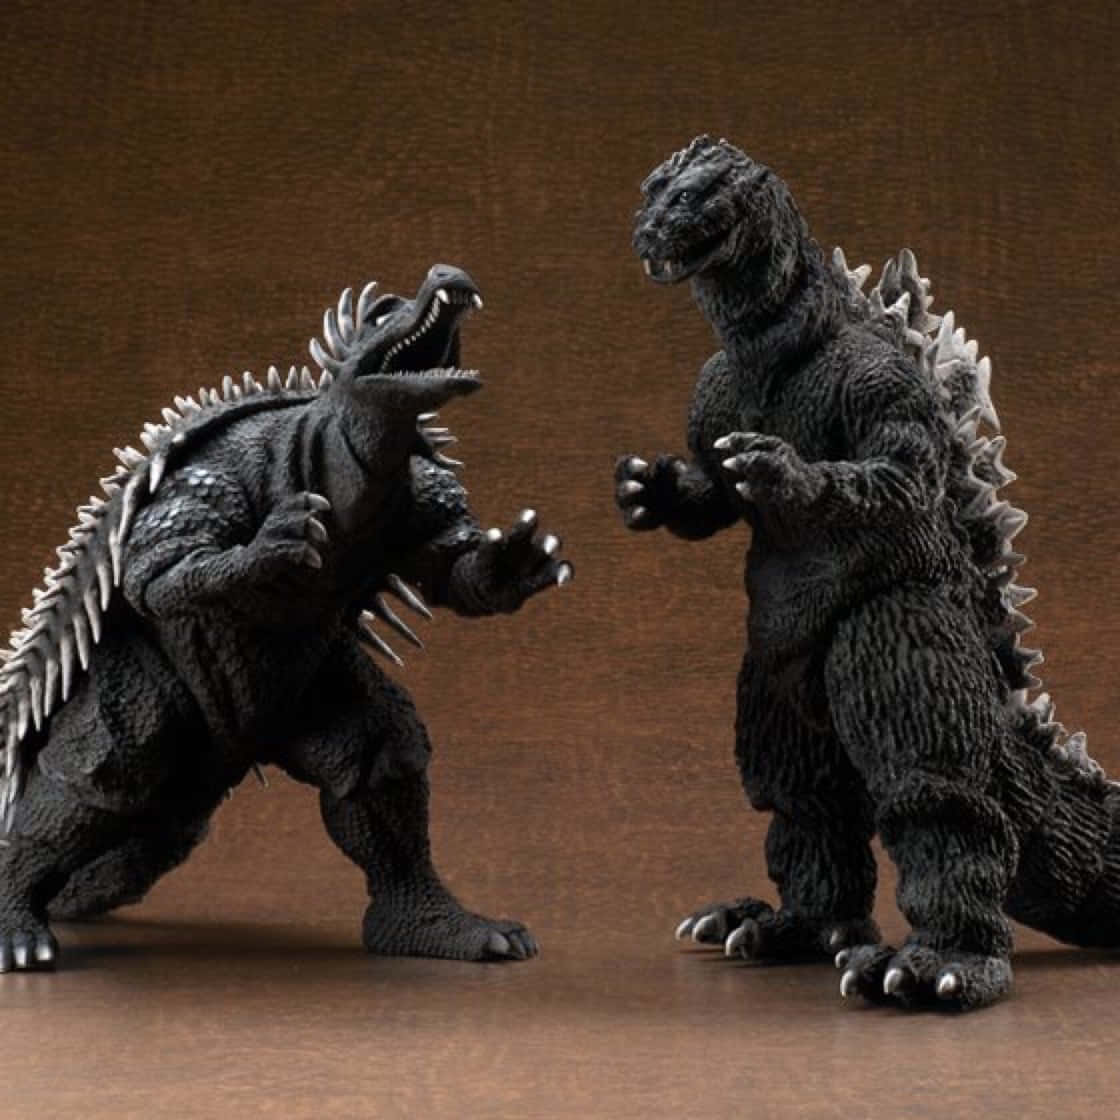 Caption: Godzilla and Anguirus Epic Battle Wallpaper